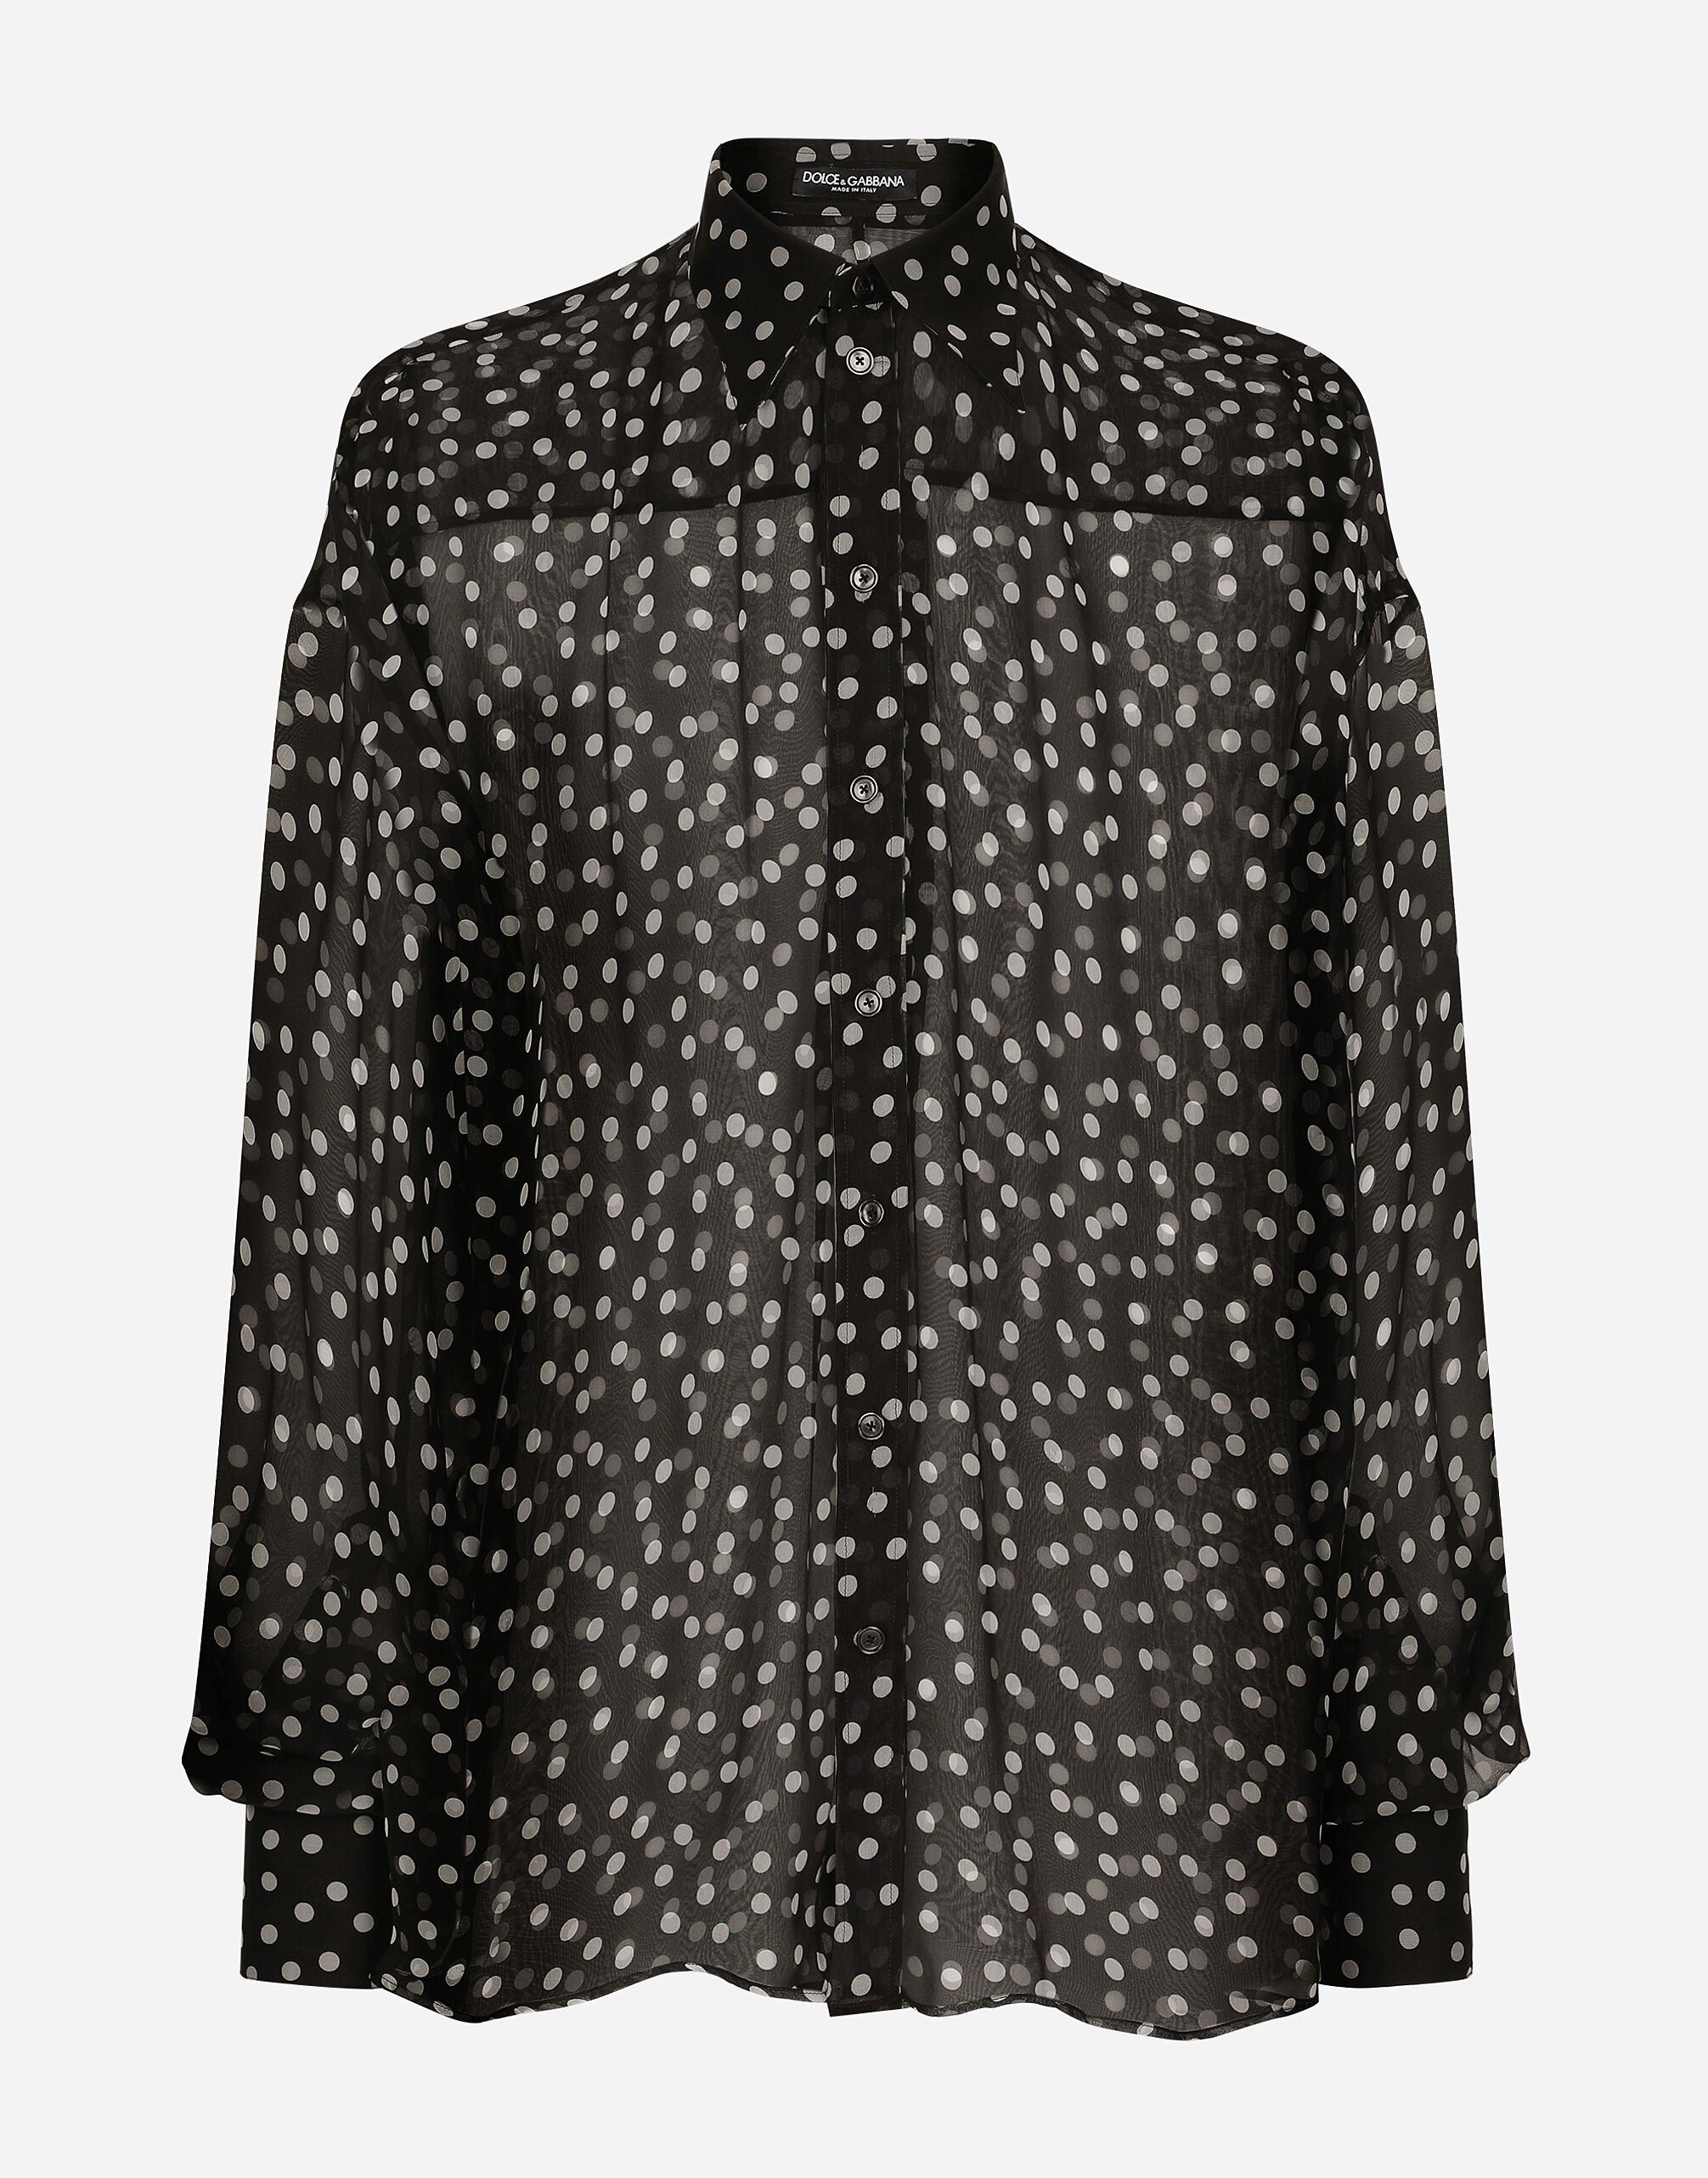 Dolce & Gabbana Super-oversize silk chiffon shirt with polka-dot print Black G2TM9TFUBFY